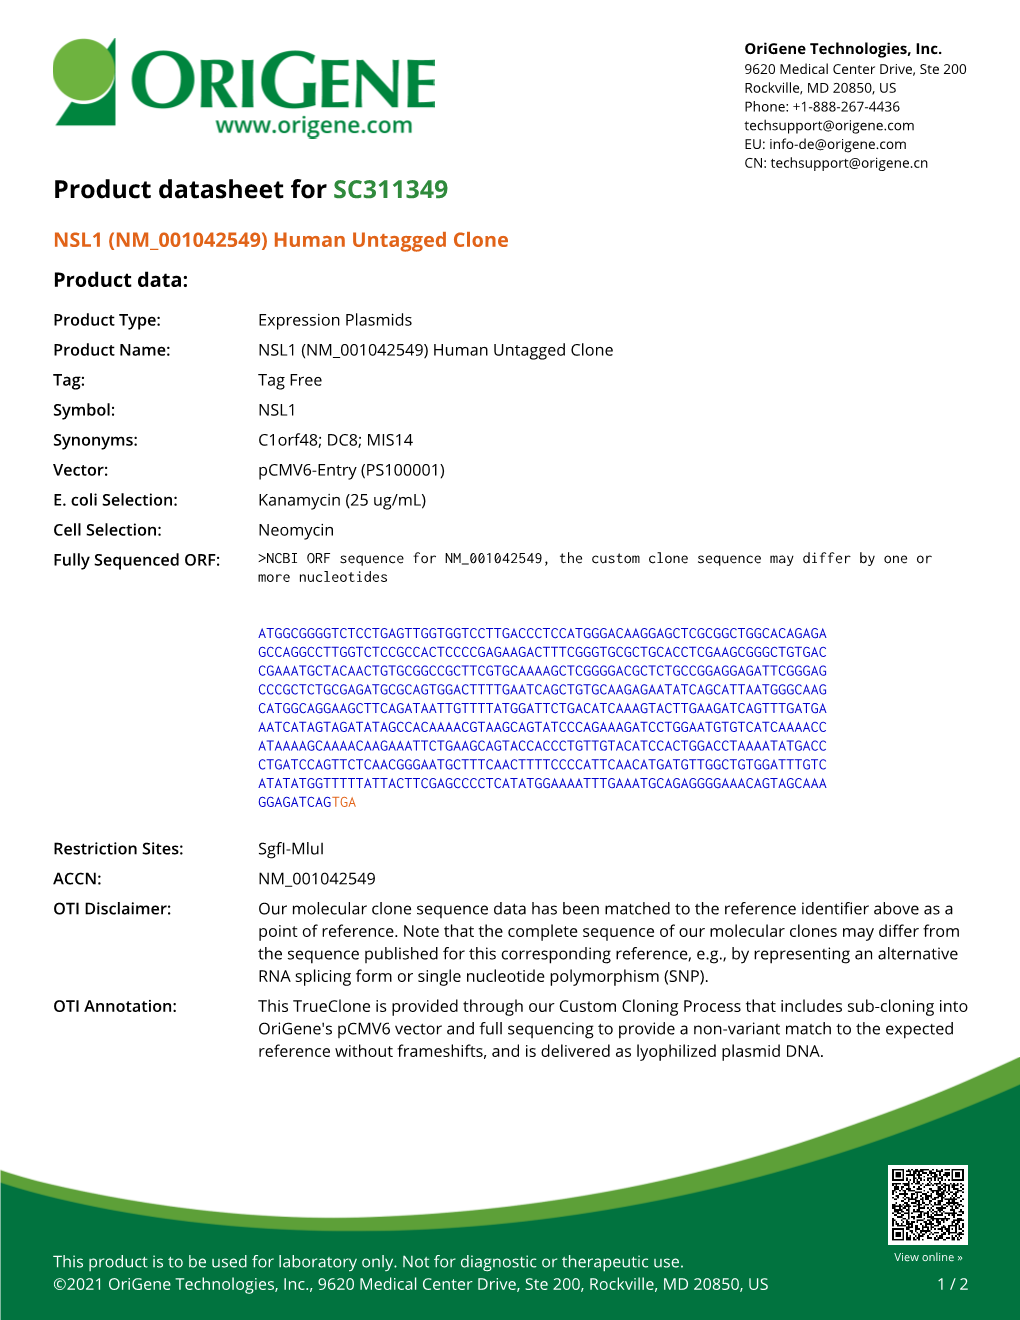 NSL1 (NM 001042549) Human Untagged Clone Product Data